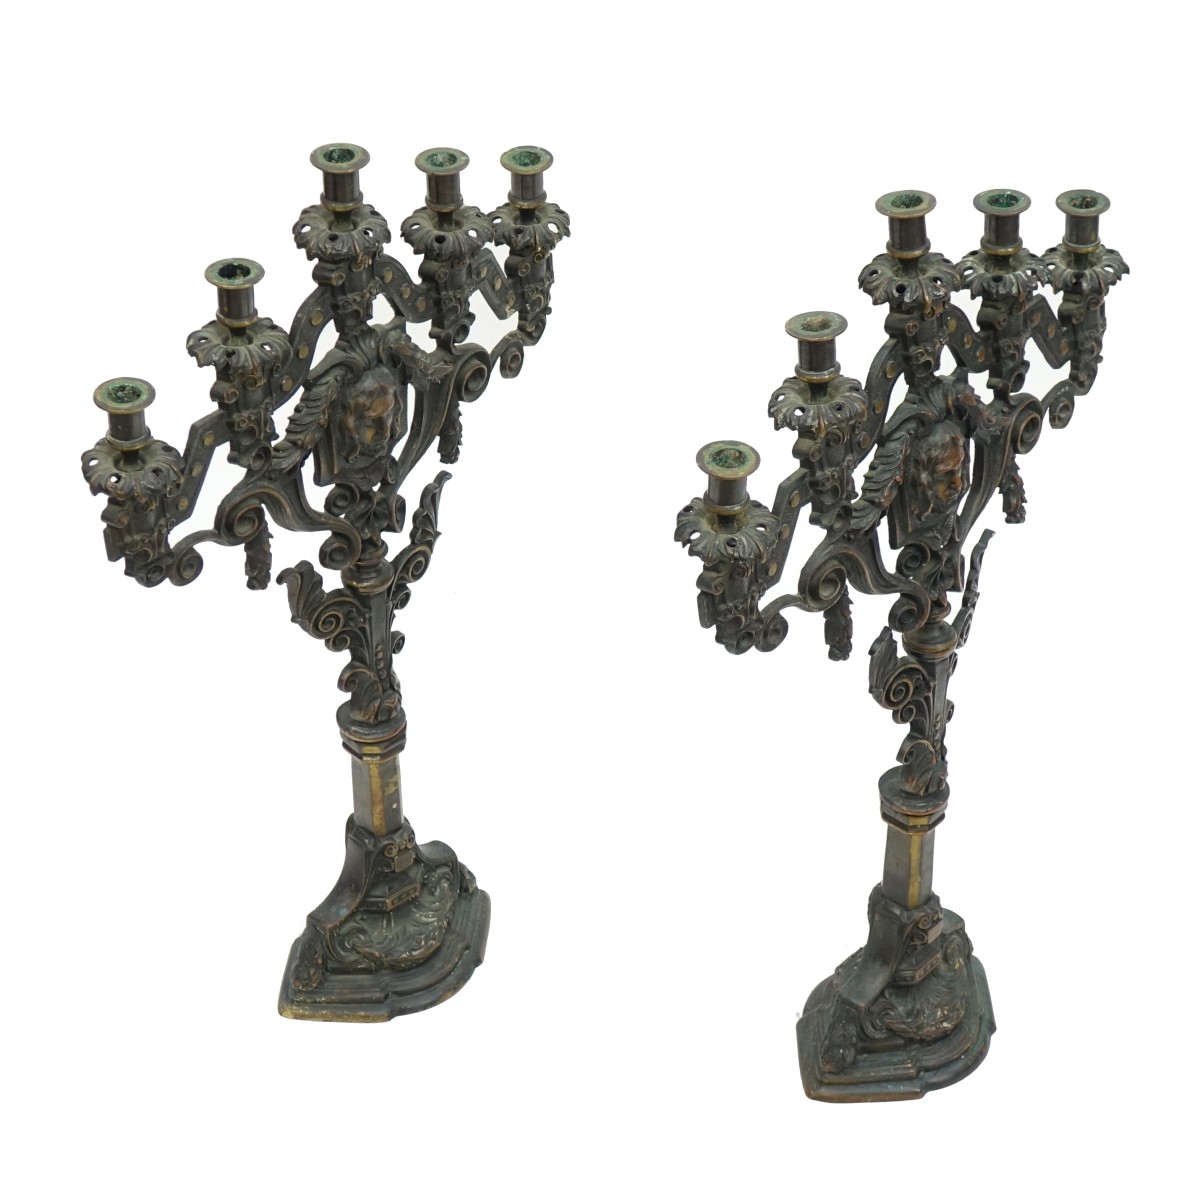 Pair of Renaissance Style Bronze Candelabra